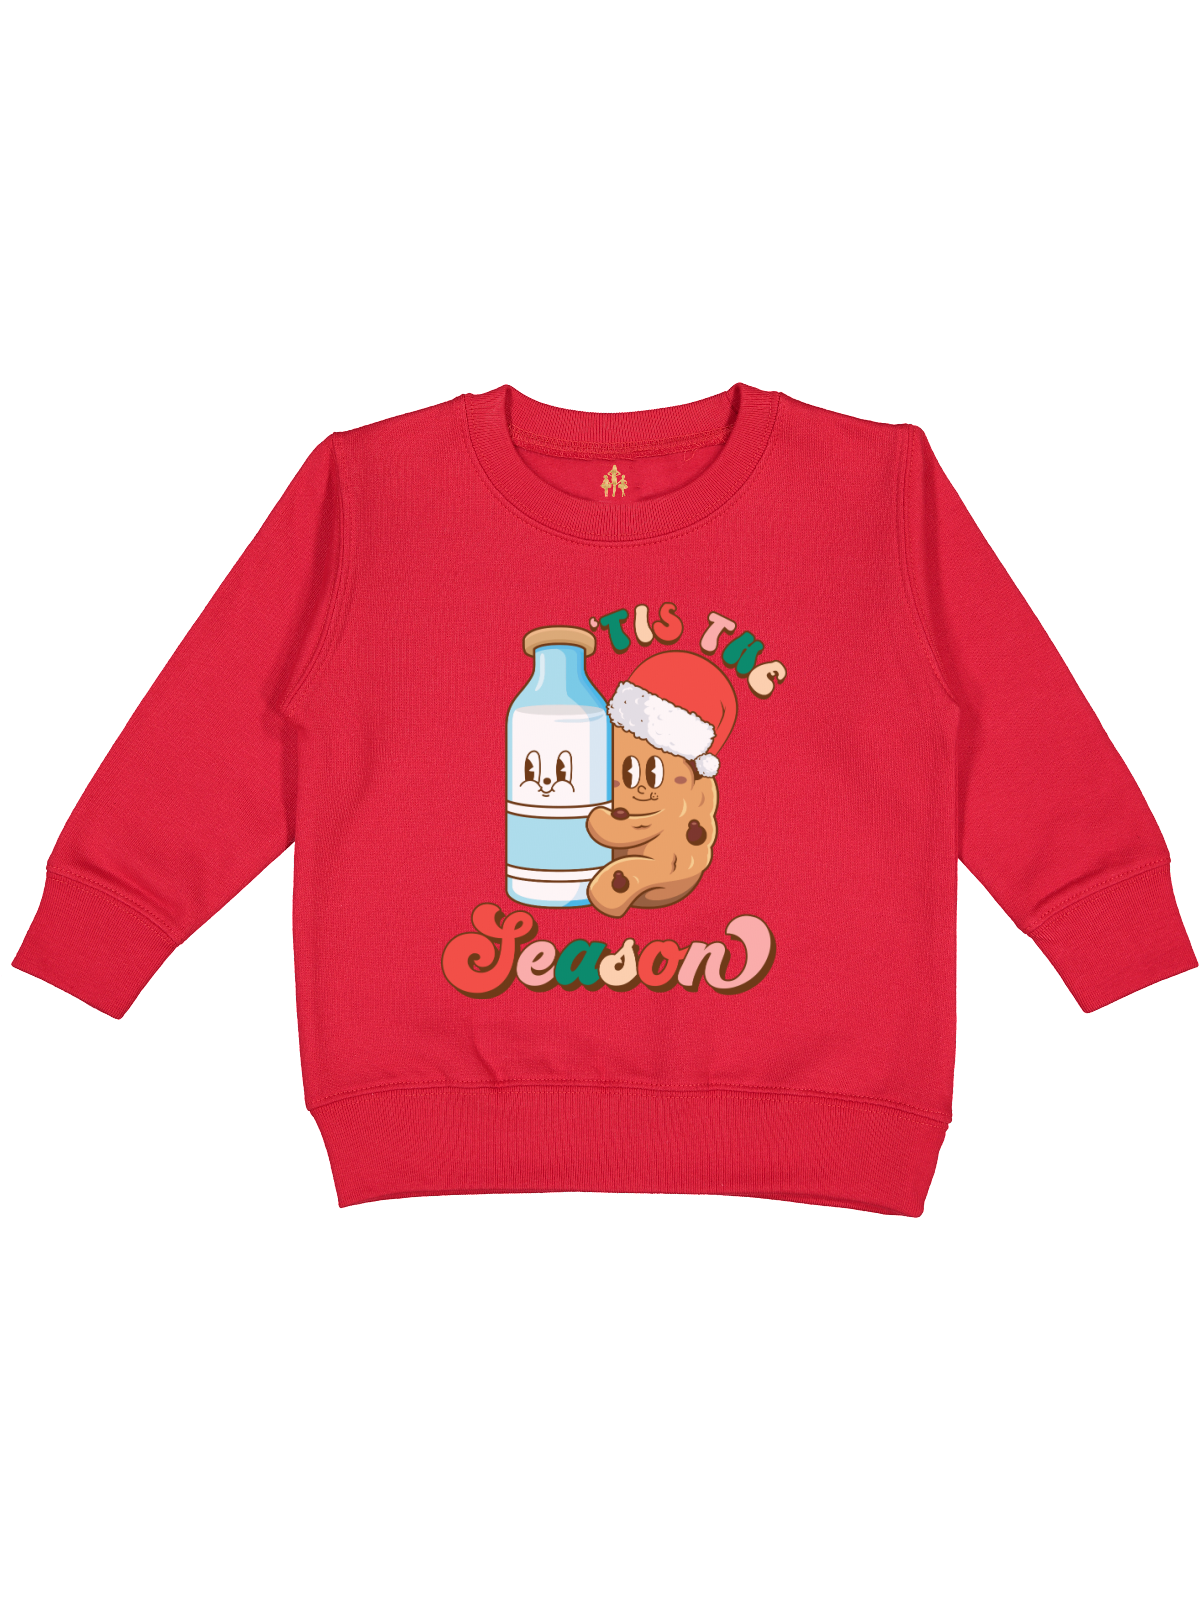 Tis the Season Kids Christmas Sweater